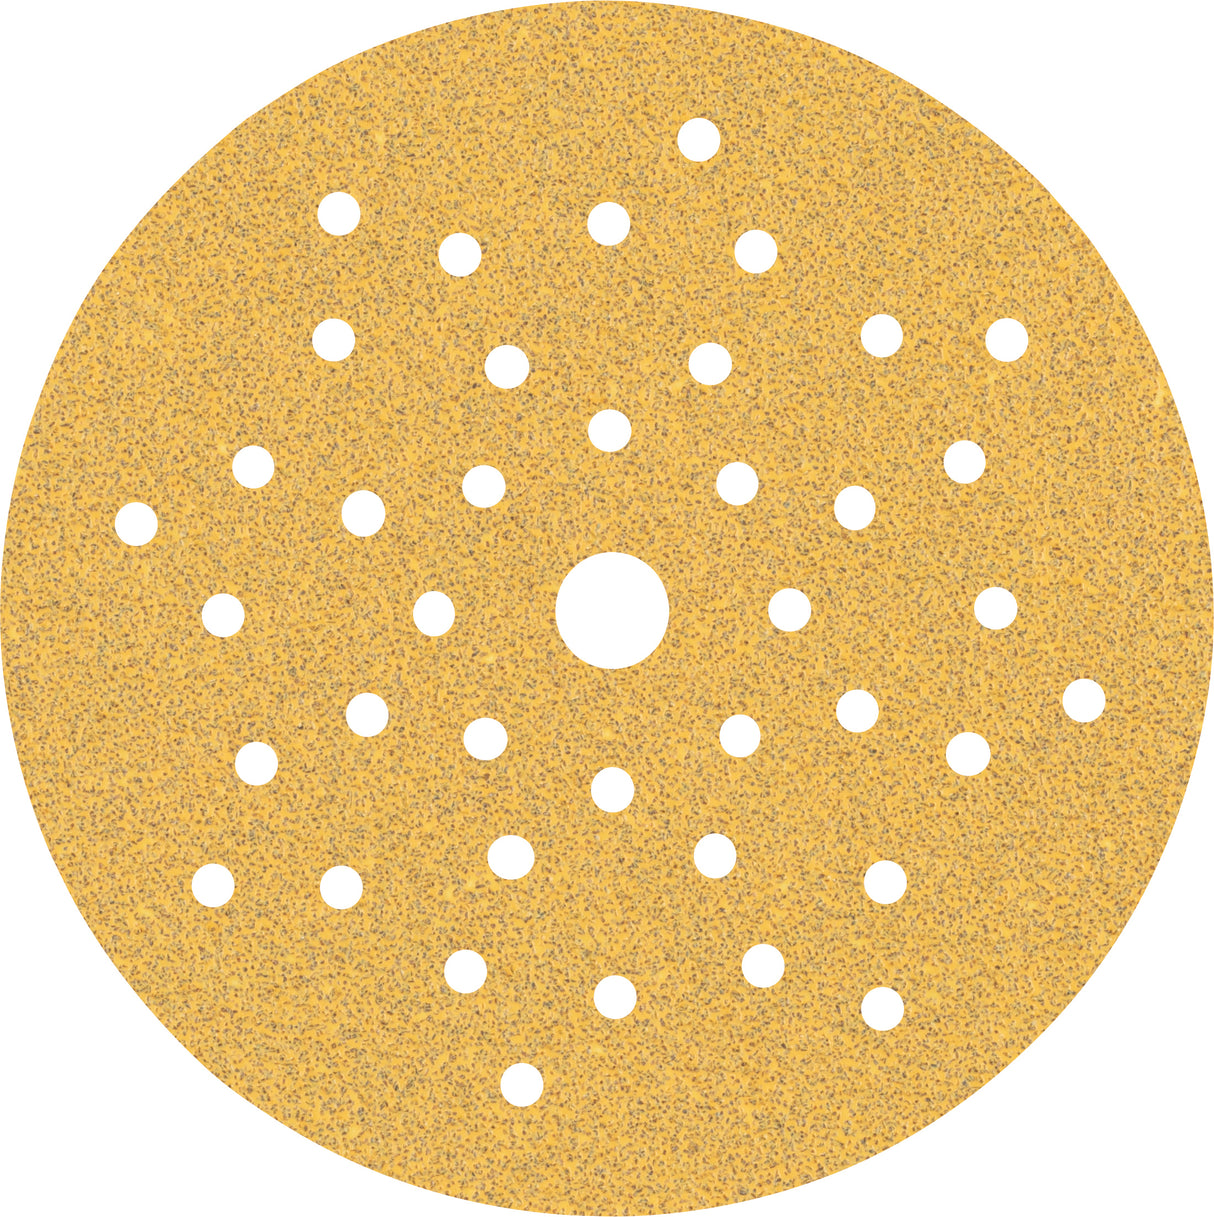 Bosch Professional Expert C470 Sandpaper - 125mm Random Orbital Sanders, Multihole, G 60